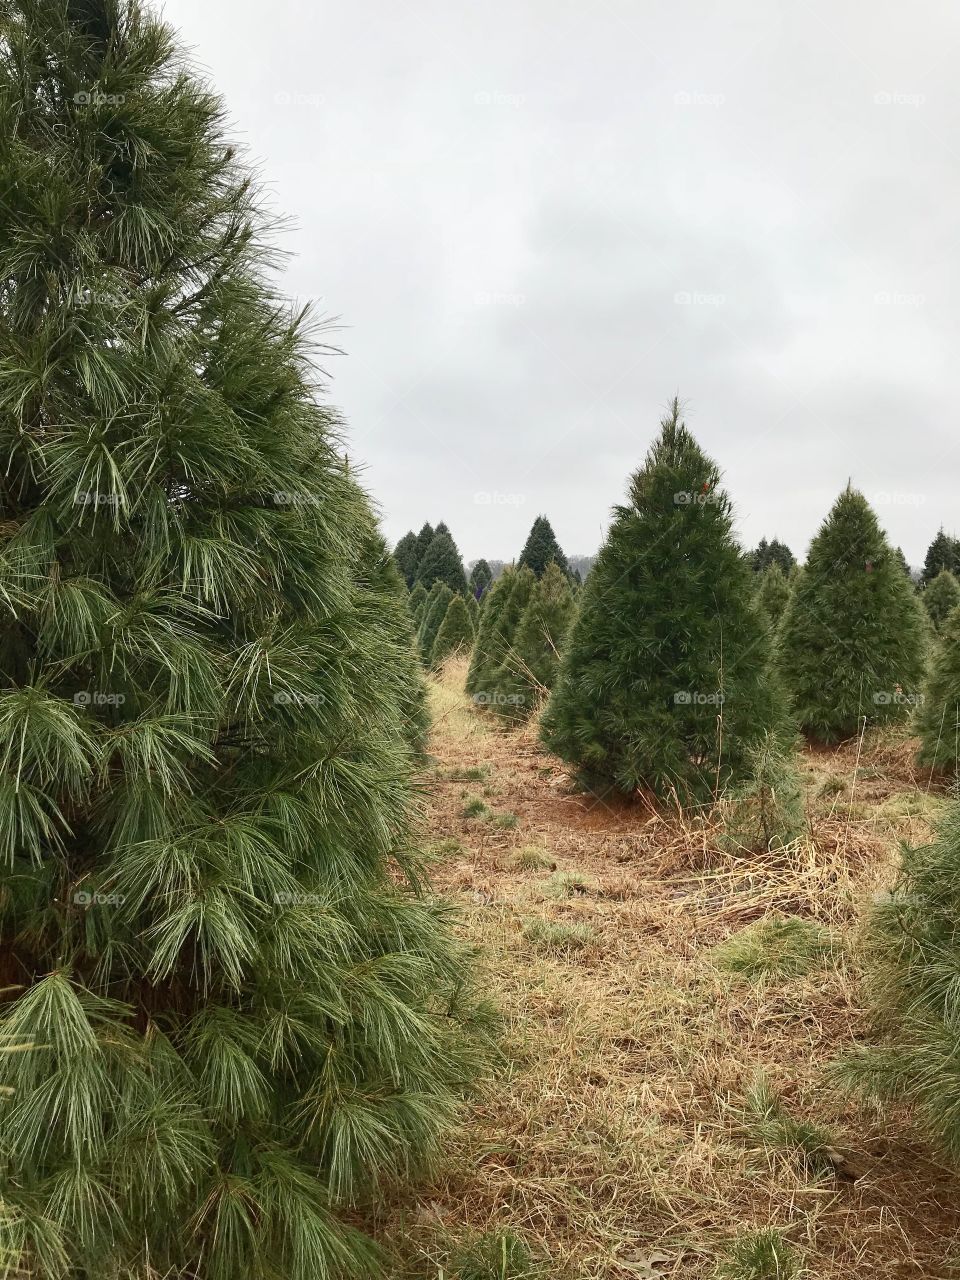 Christmas tree farm in Minnesota USA